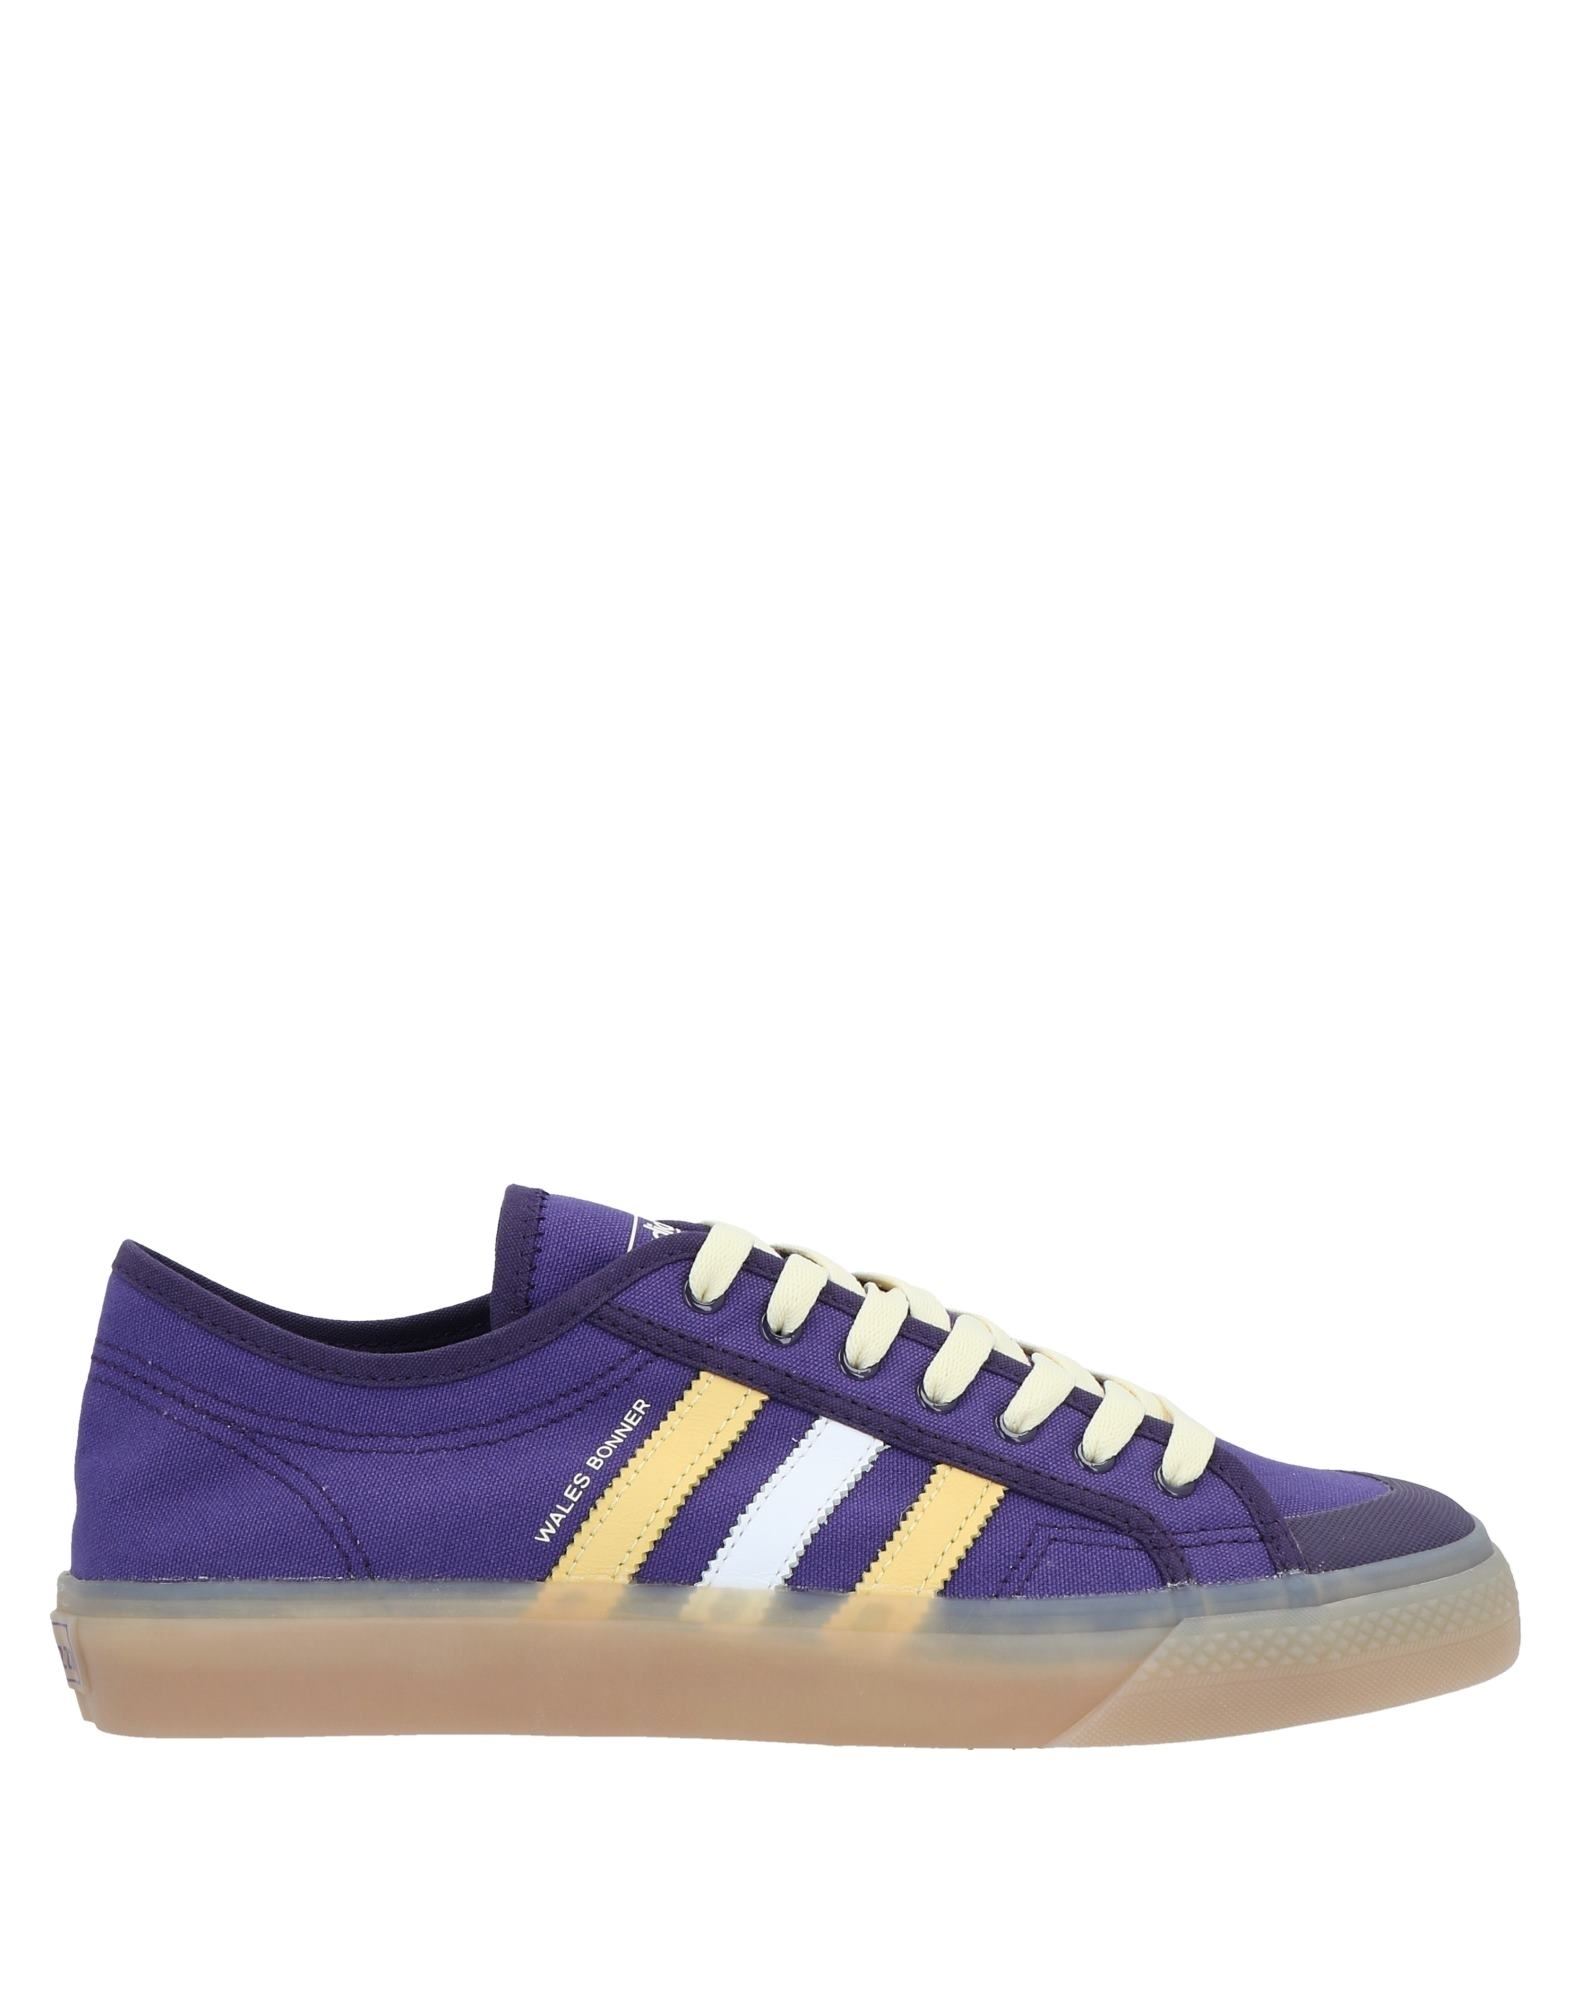 Adidas Originals By Wales Bonner Sneakers In Purple